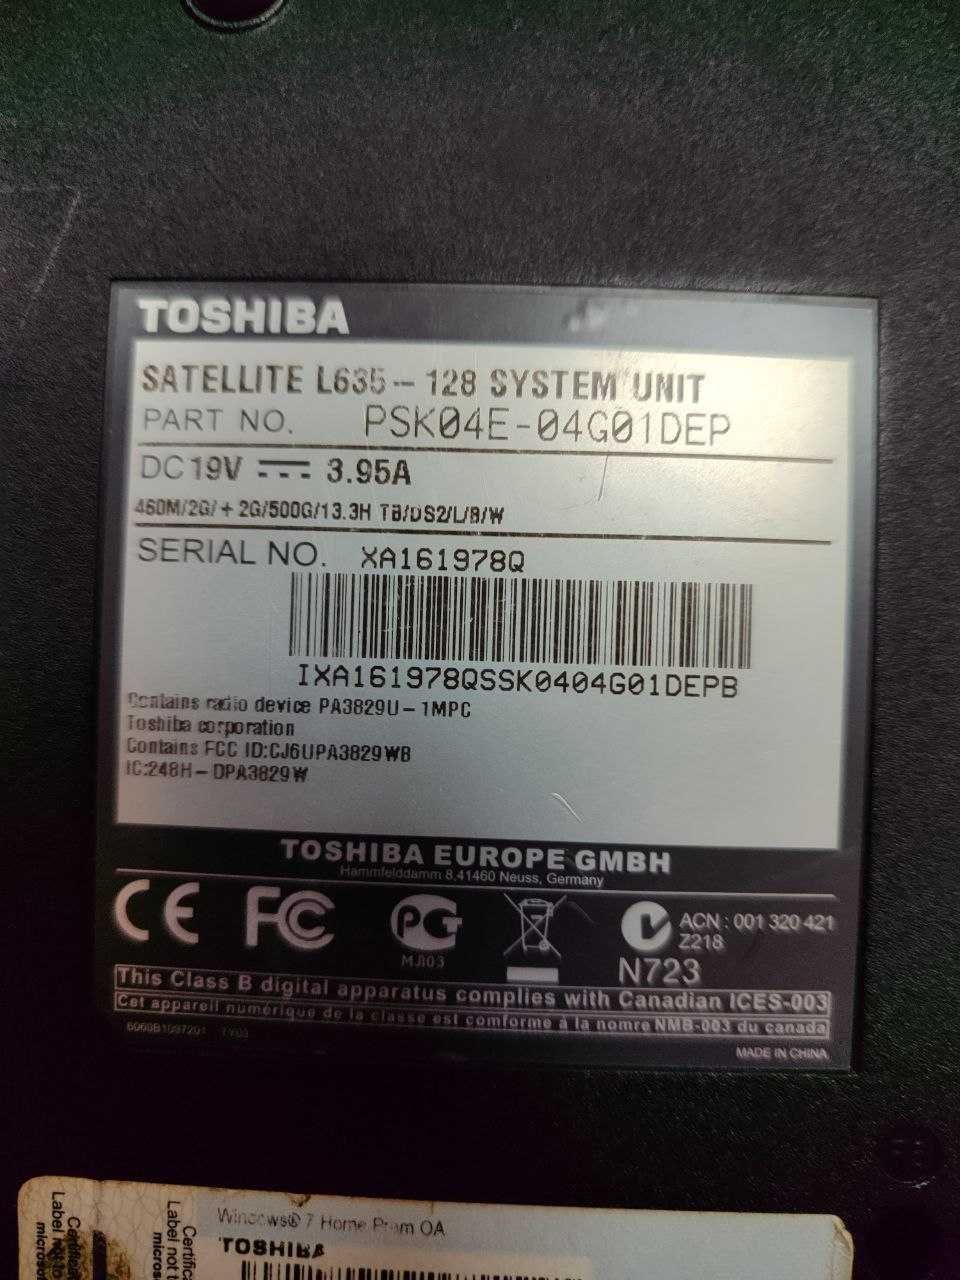 Розборка Toshiba satellite L635-128 (PSK04E-04G0IDEP)